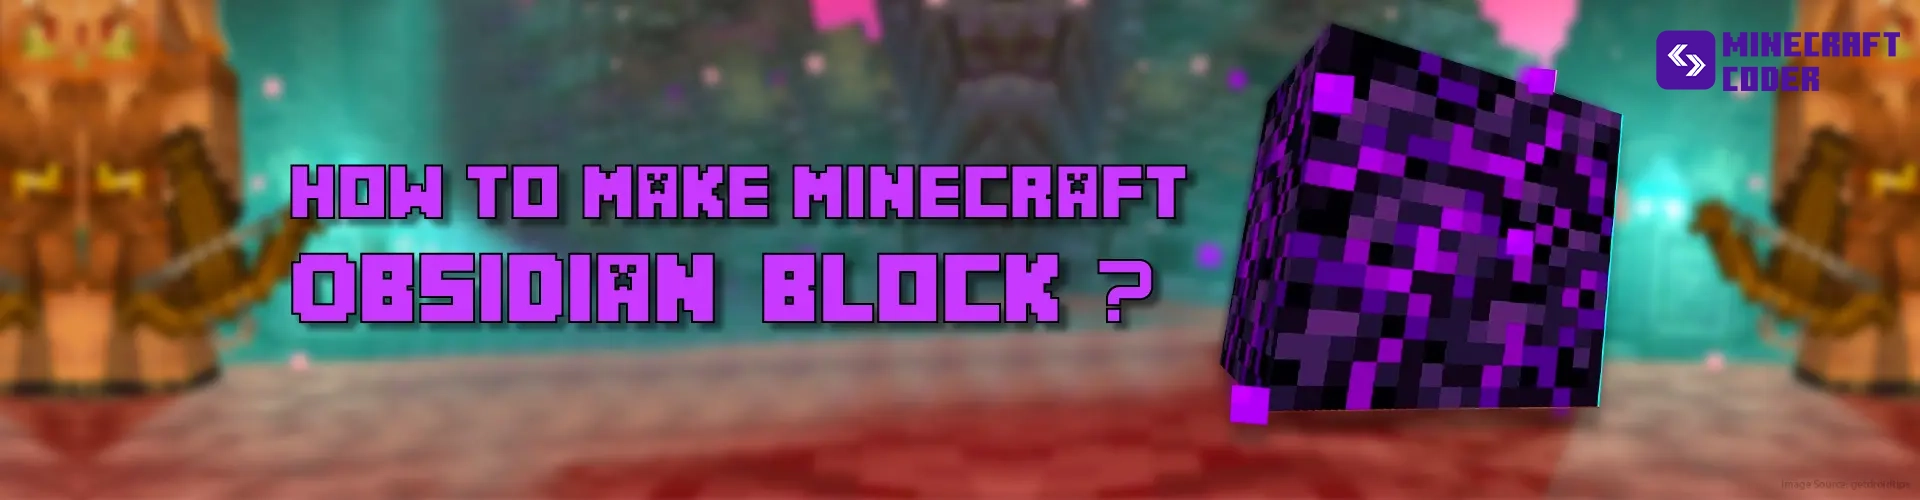 Make Minecraft Obsidian Block